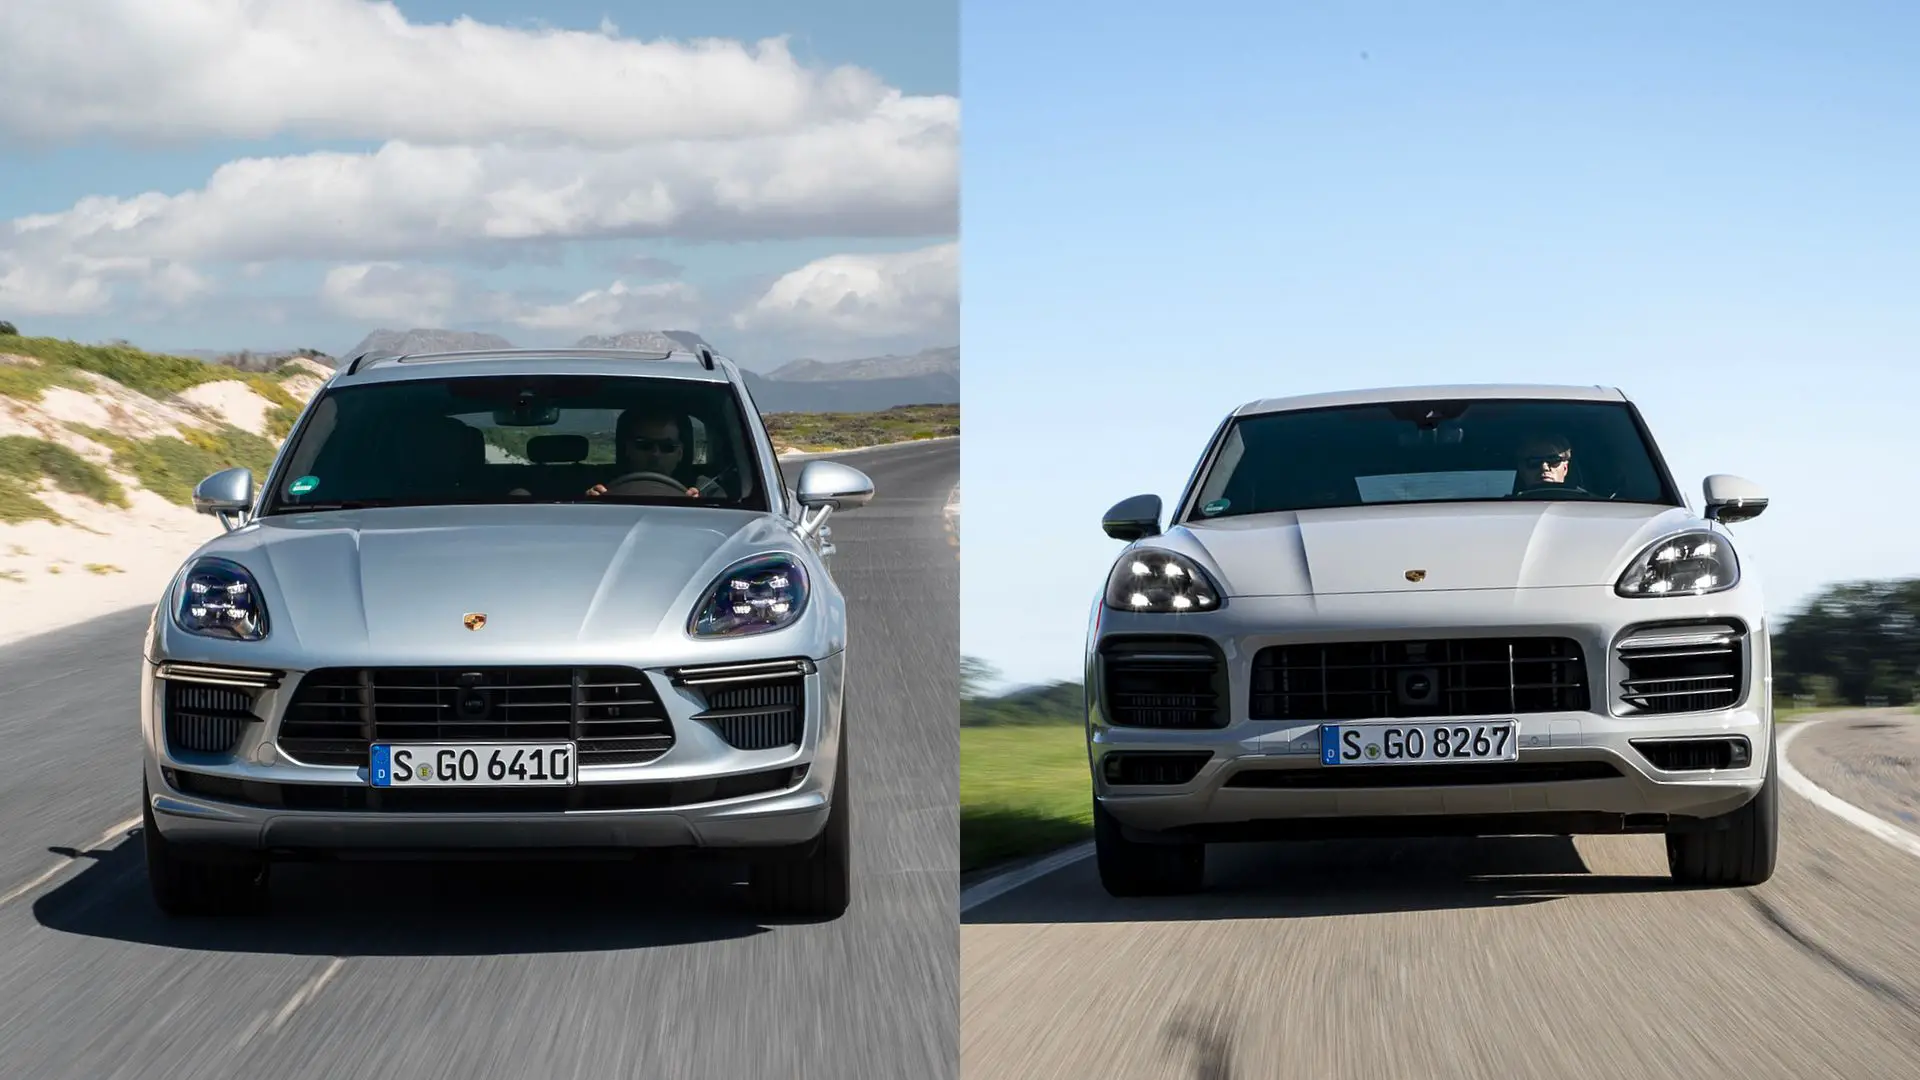 Porsche Macan vs Cayenne comparison